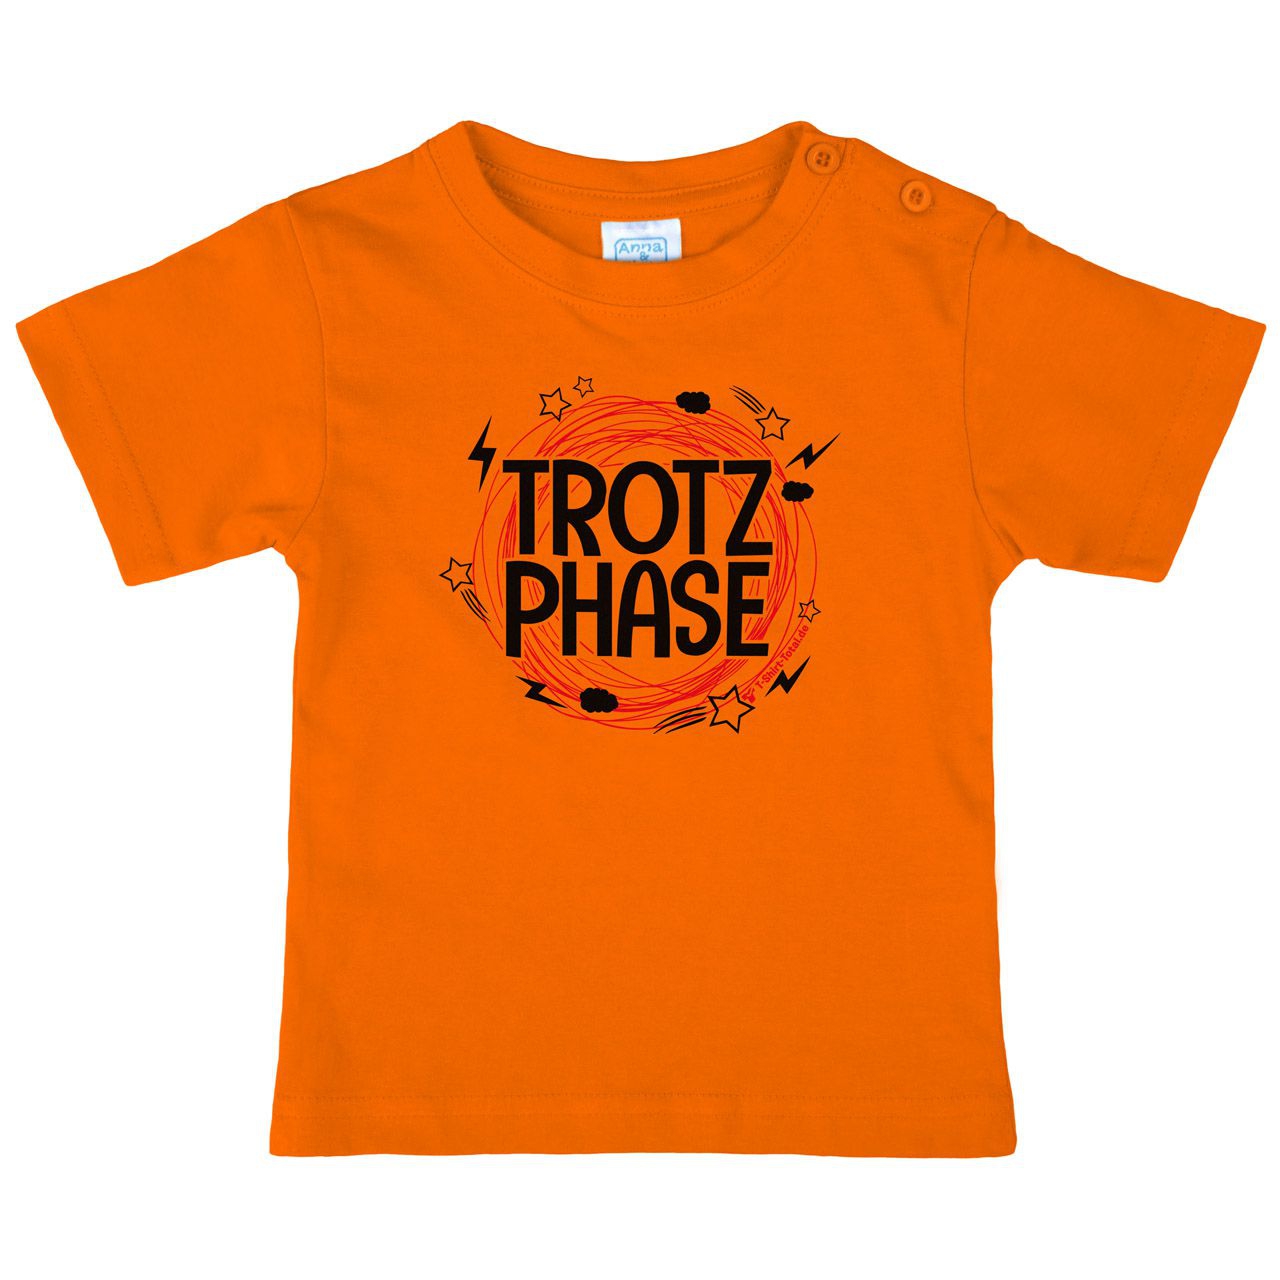 Trotzphase Kinder T-Shirt orange 104